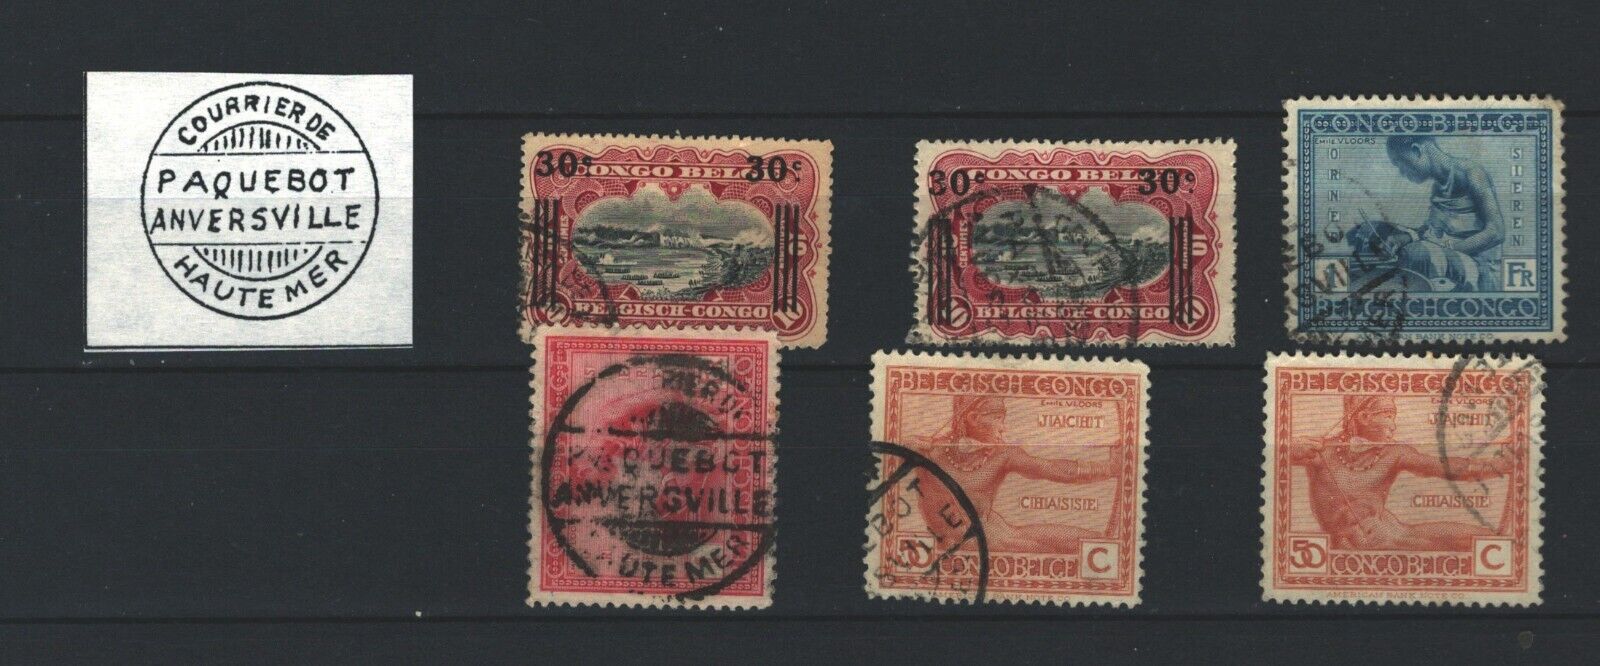 Congo Belge Belgium Colonies  Town Cancel Used Stamps  Lot (congo  40)